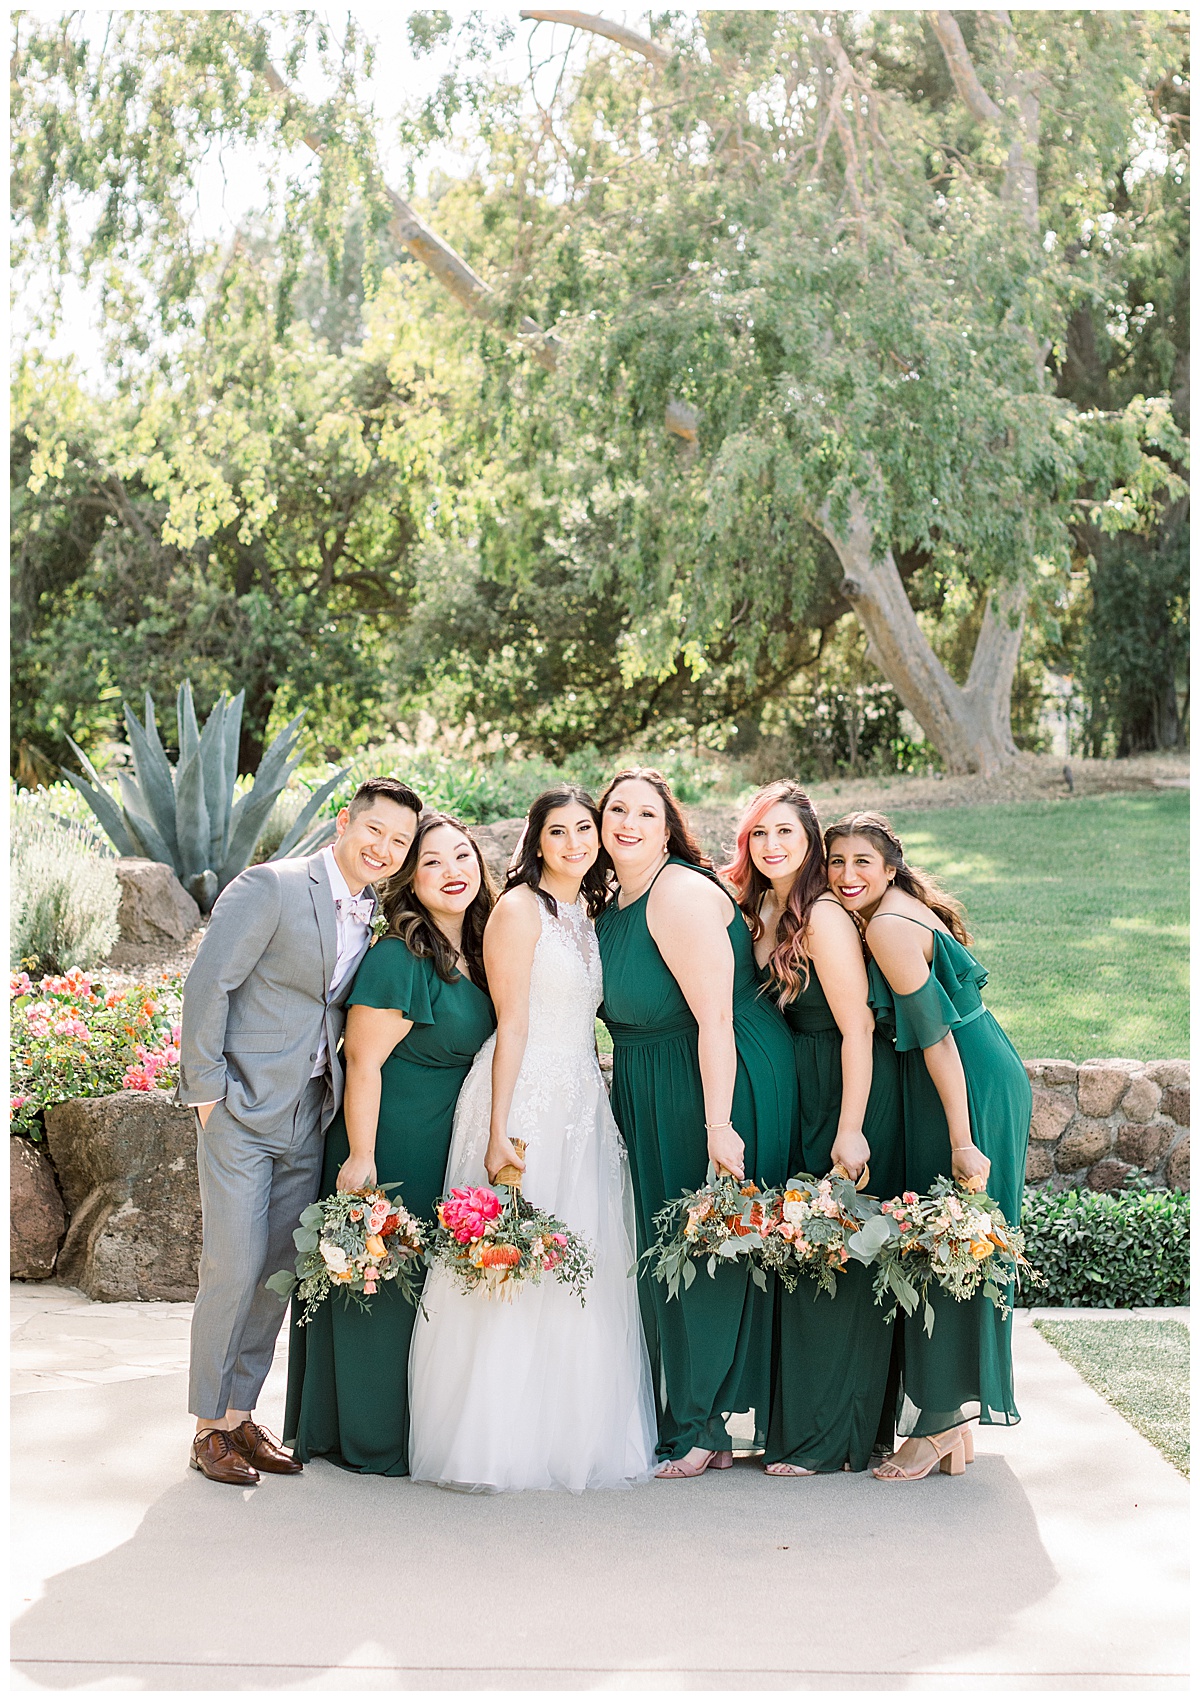 Emerald Green Bridesmaids Dress
Bridesman in Grey Suit